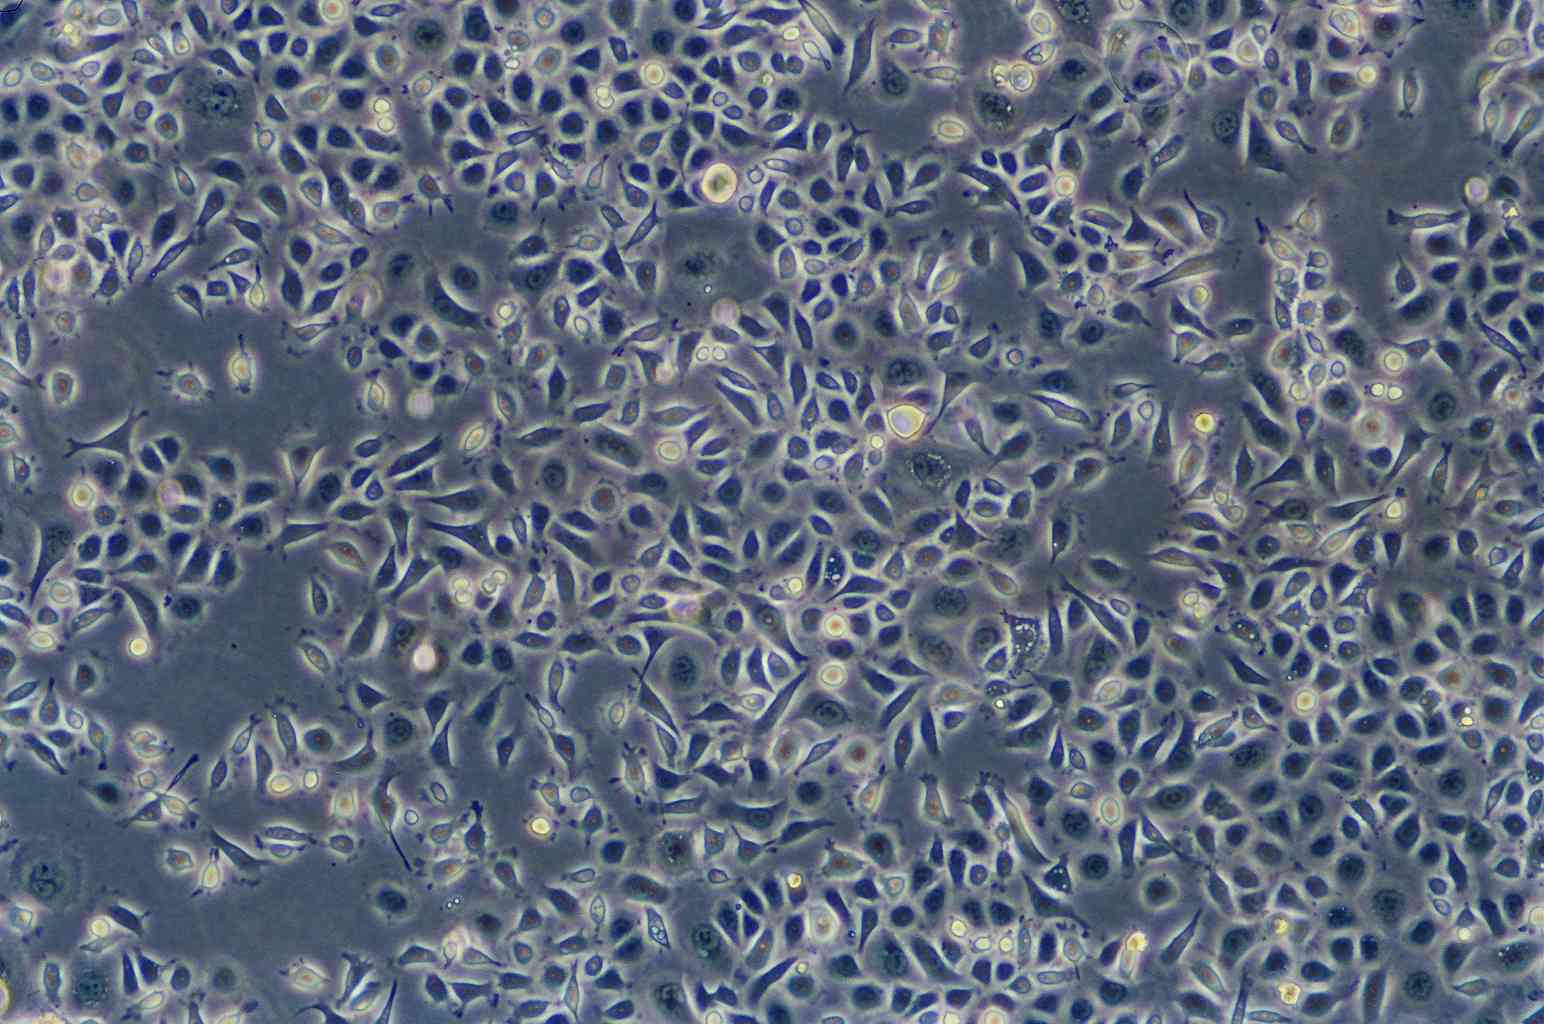 YTMLC-90 epithelioid cells人肺鳞癌细胞系,YTMLC-90 epithelioid cells